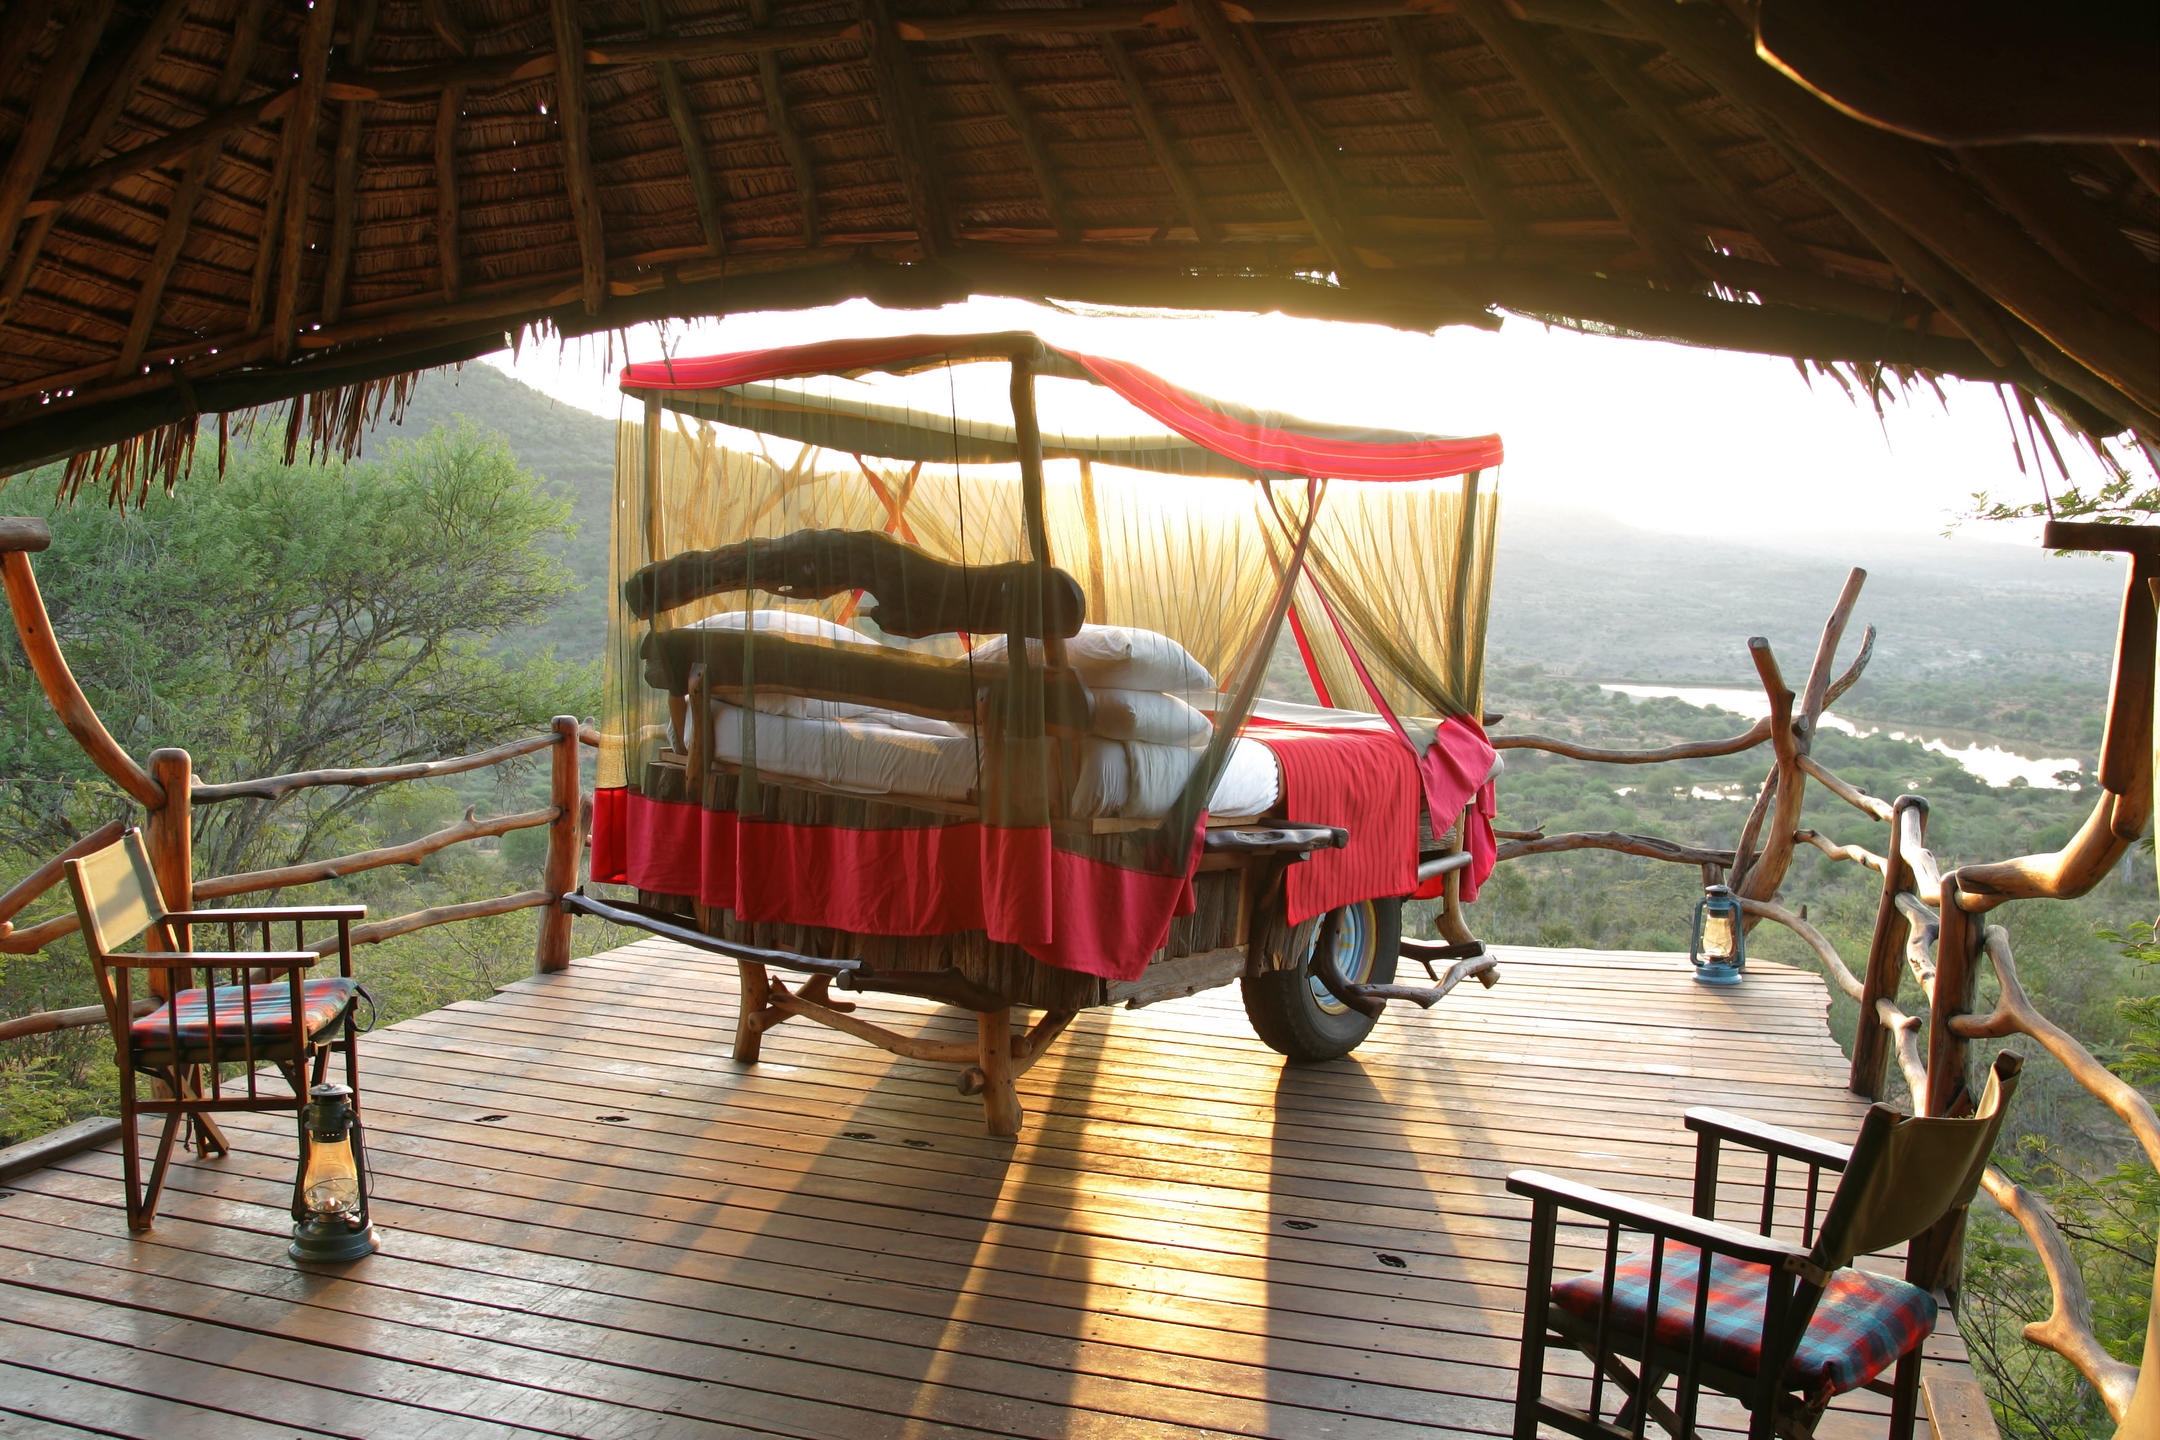 Elewana Loisaba Star Beds. Kenya